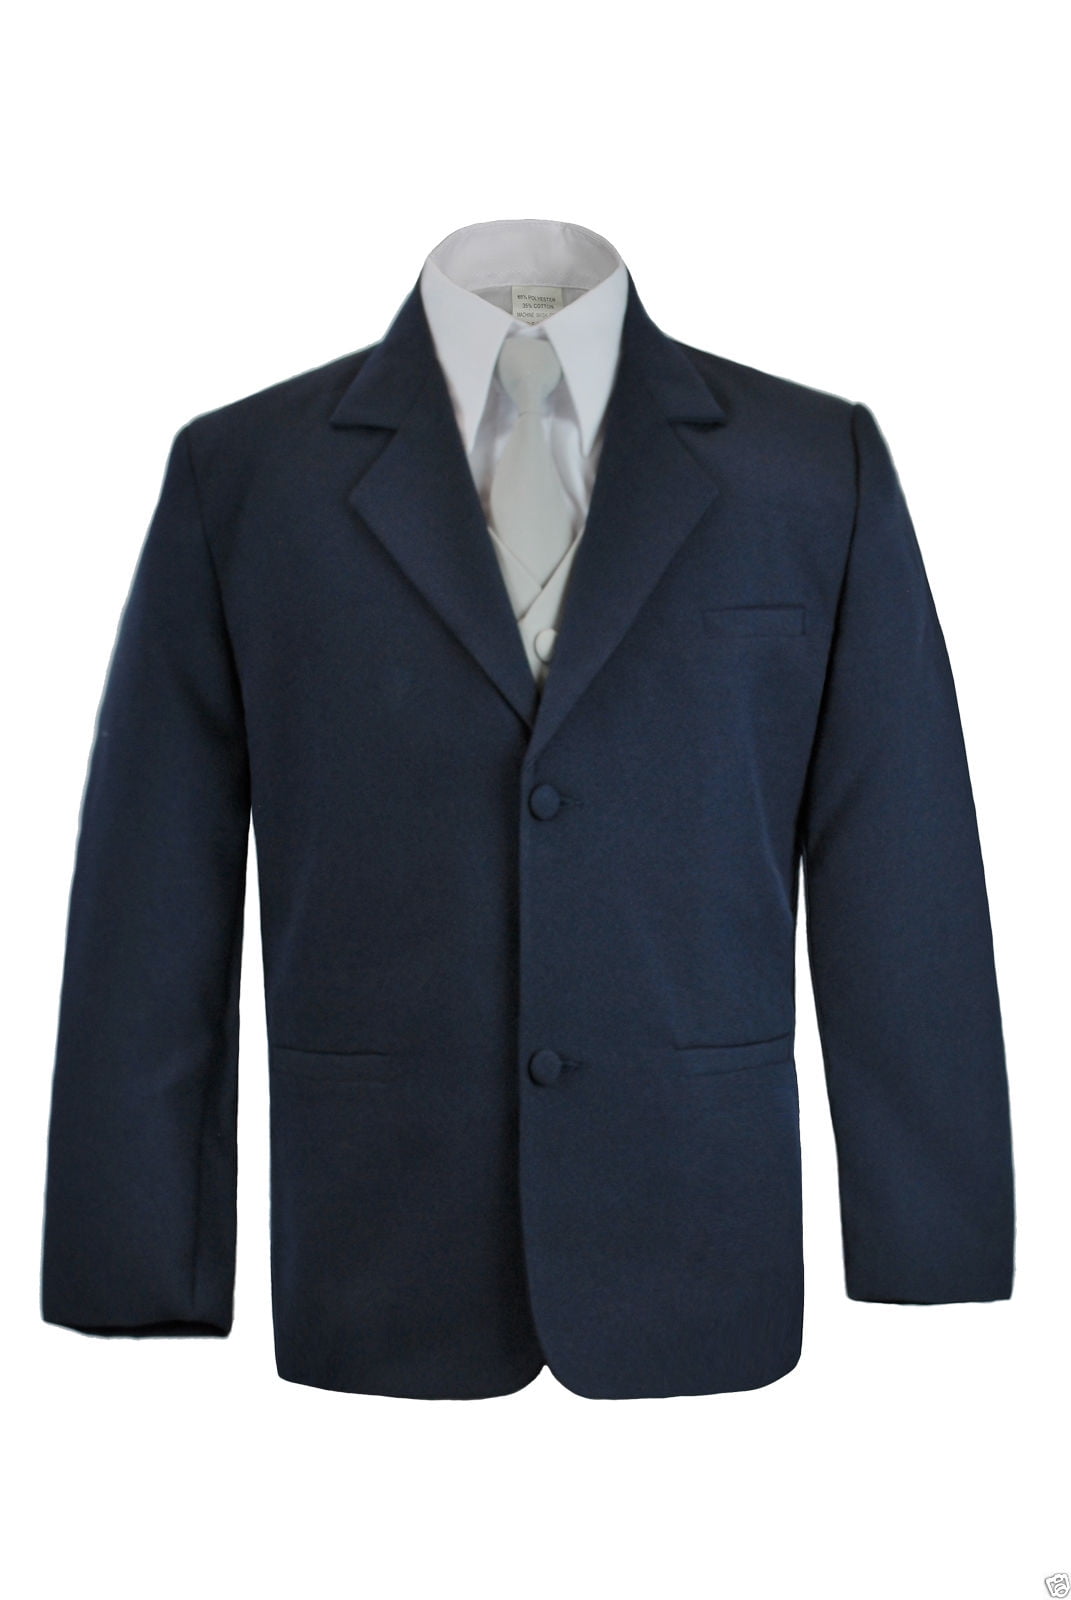 Boys Infant Formal Wedding Party Church Navy Blue Blazer Jacket Coat only sz S-7 